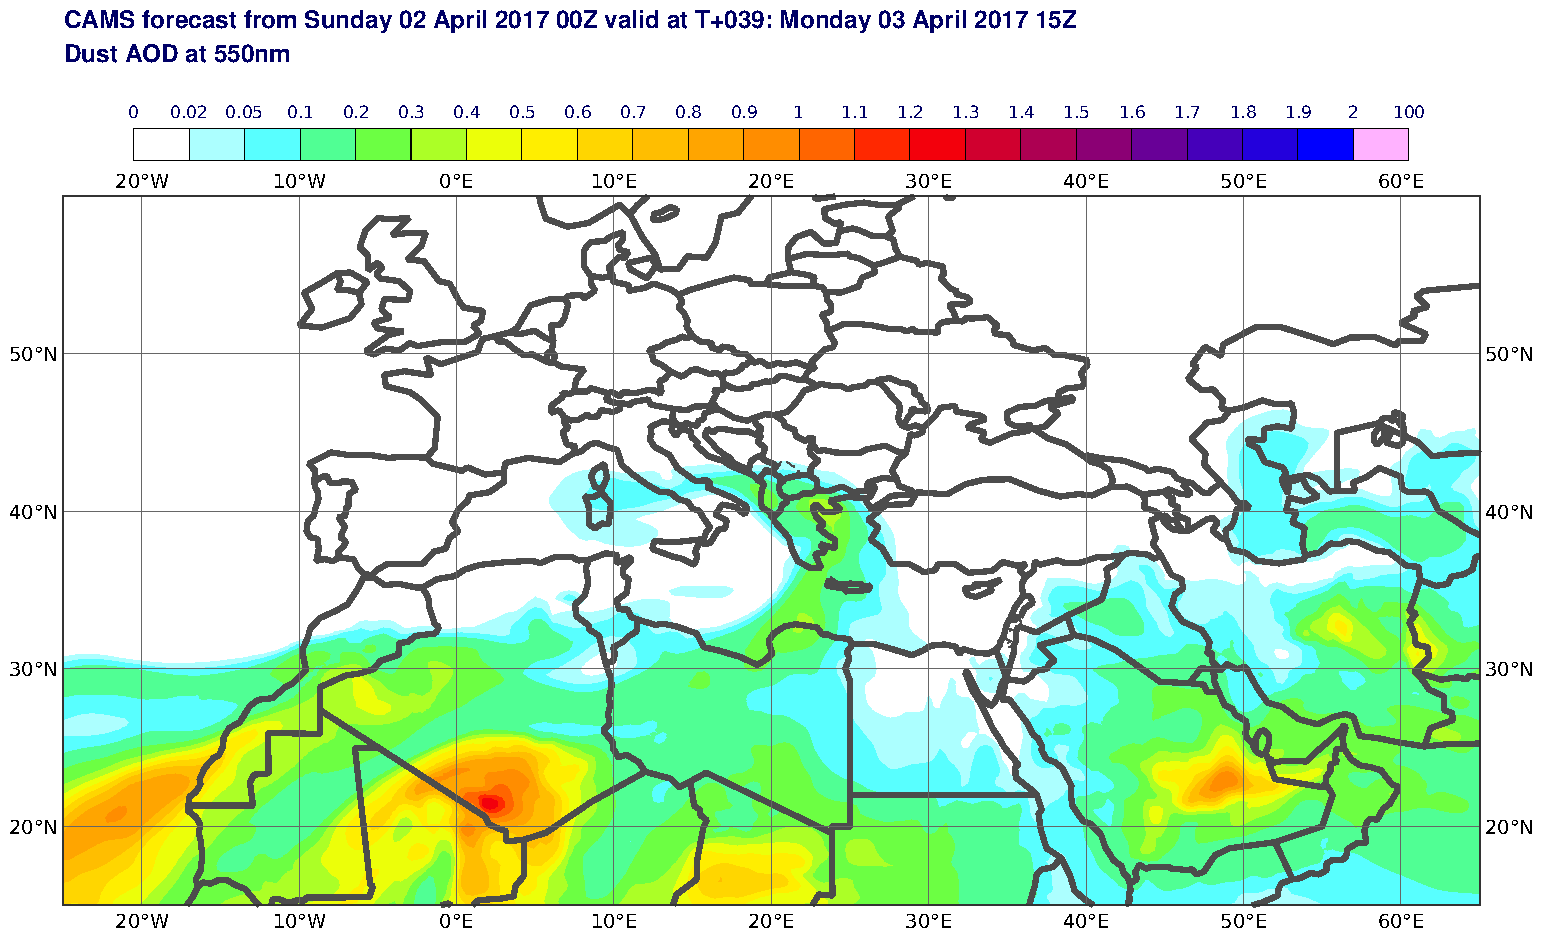 Dust AOD at 550nm valid at T39 - 2017-04-03 15:00